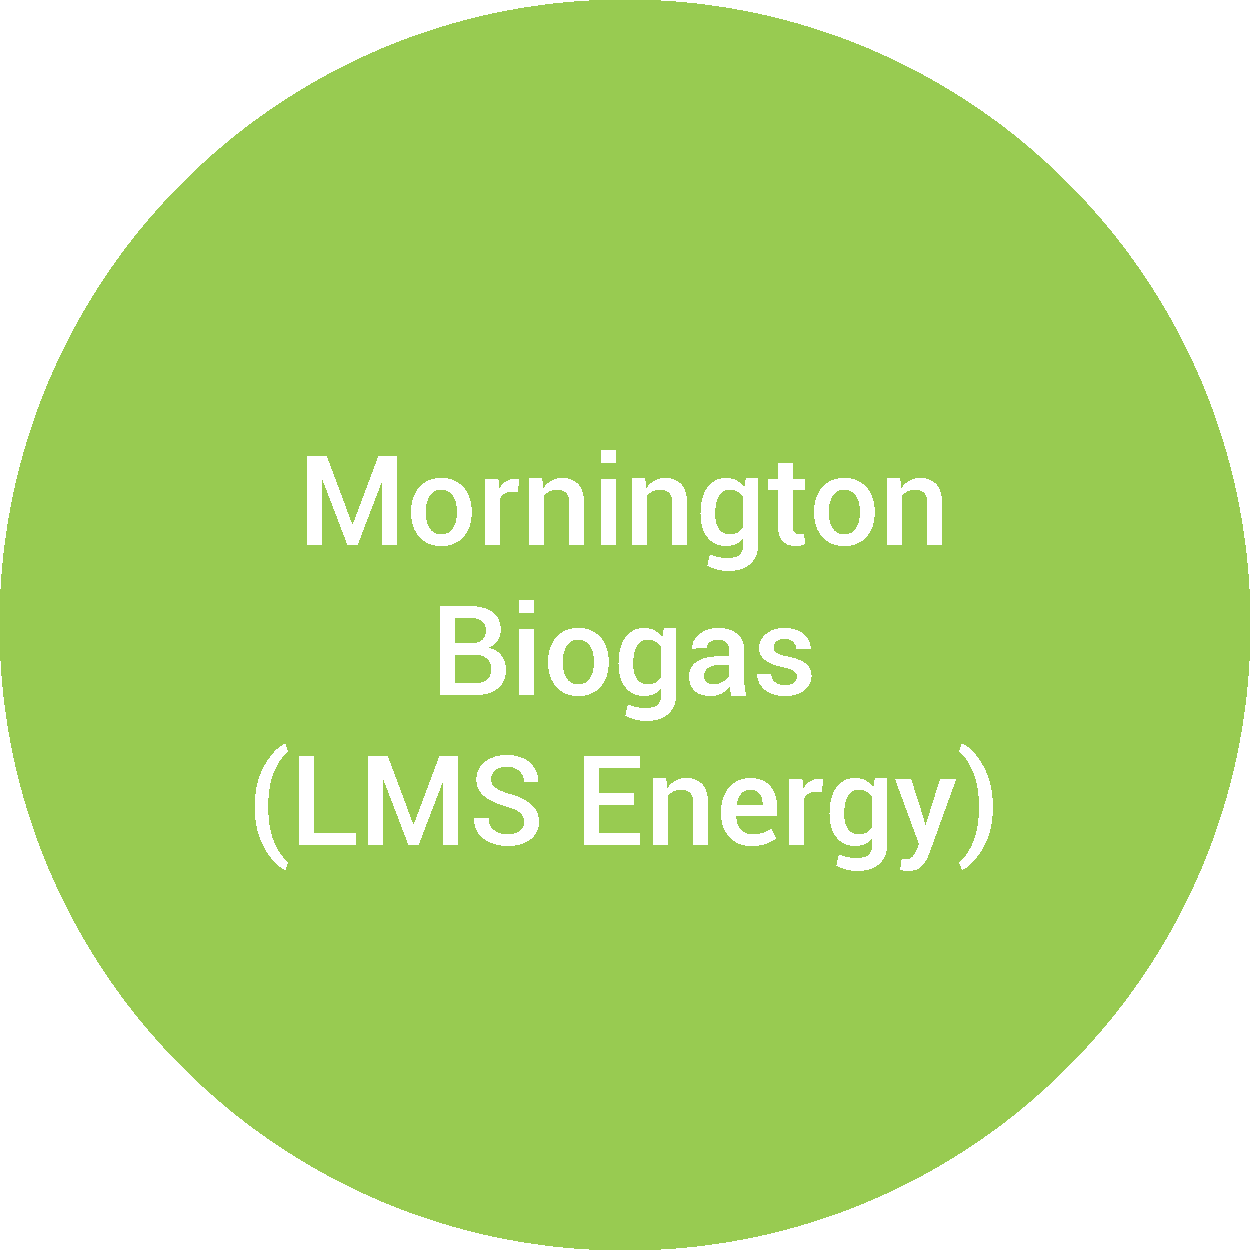 Mornington Biogas (LMS Energy)